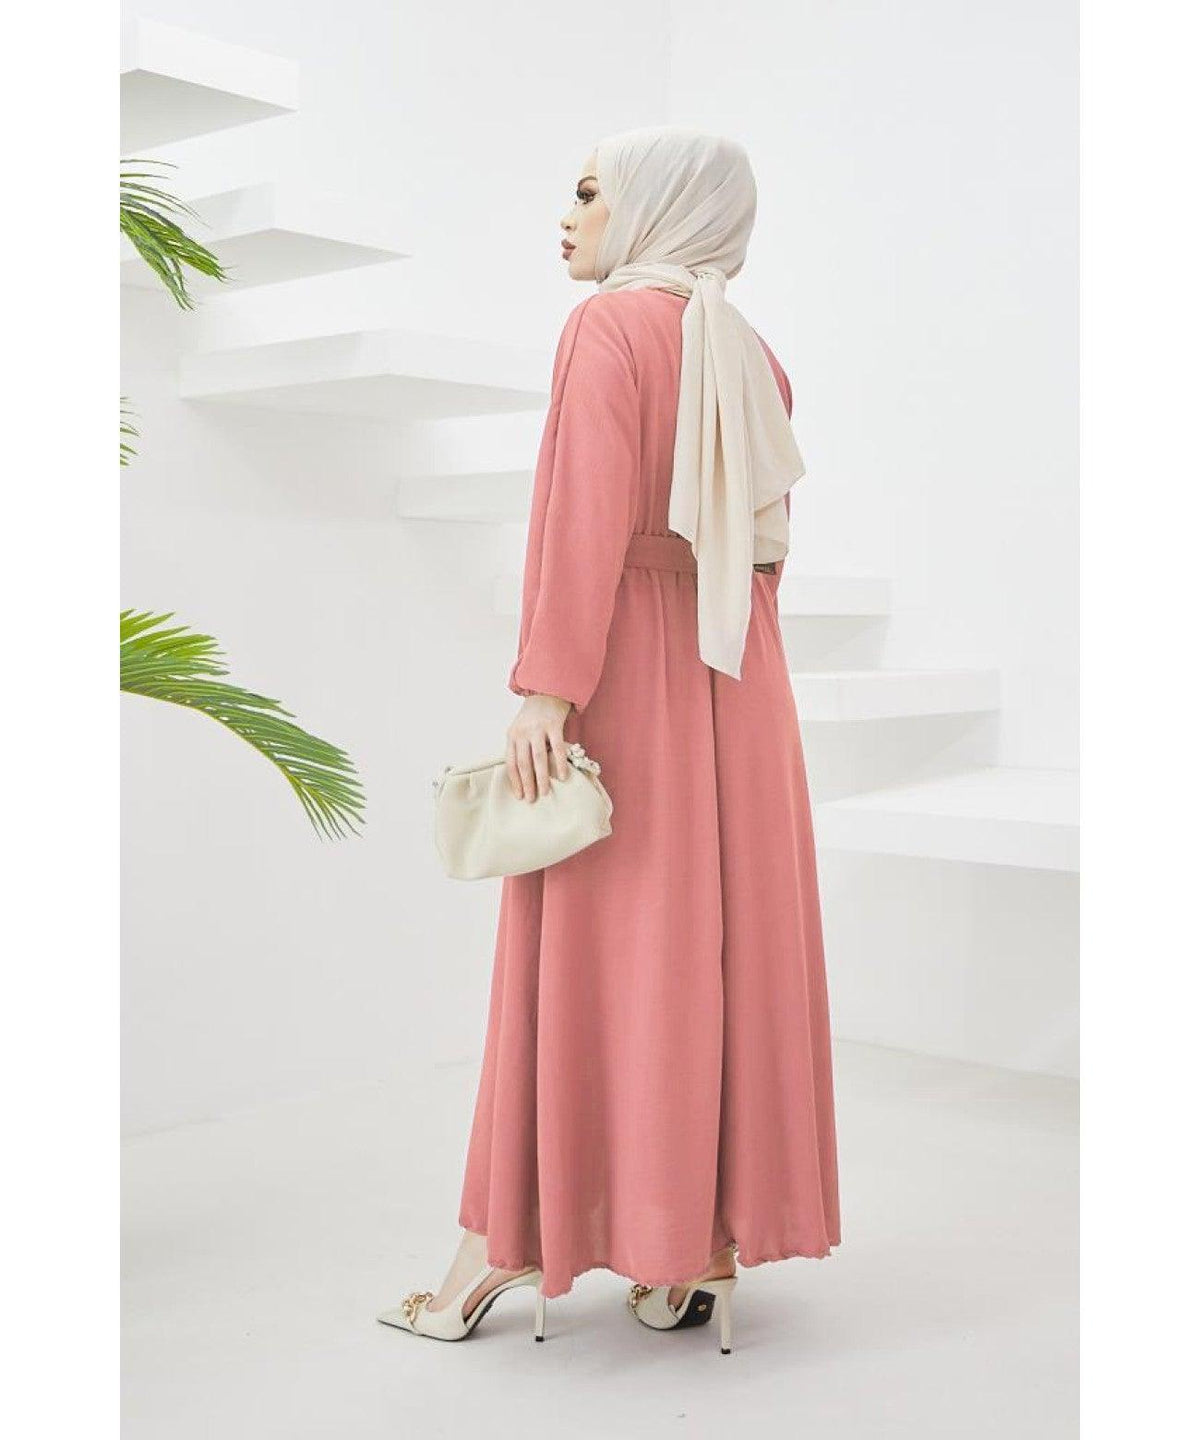 Modest Long Arab Abaya Dress - Salmon Pink